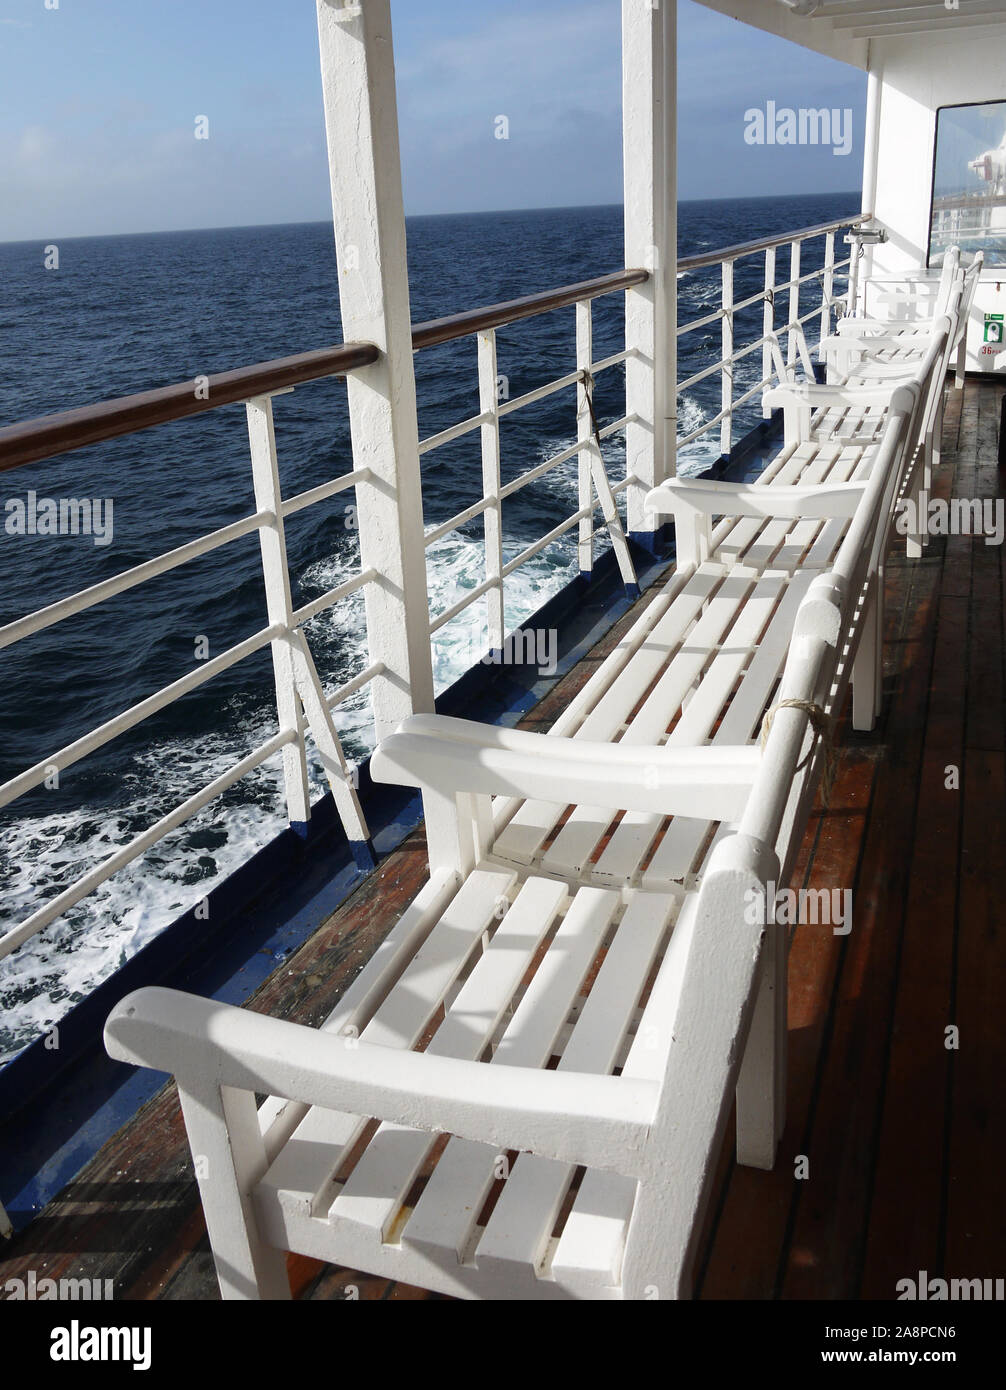 Empty seats on deck Stock Photo